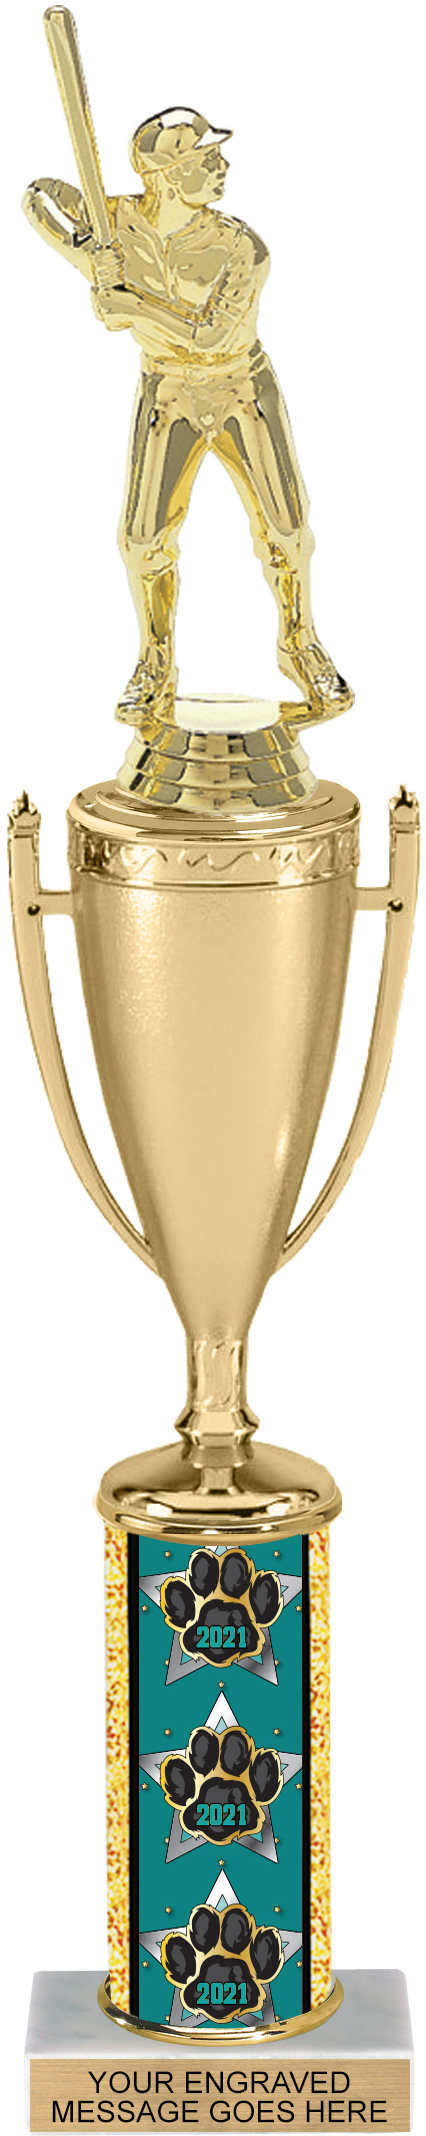 Year Paw Column Cup Trophy - 15 inch